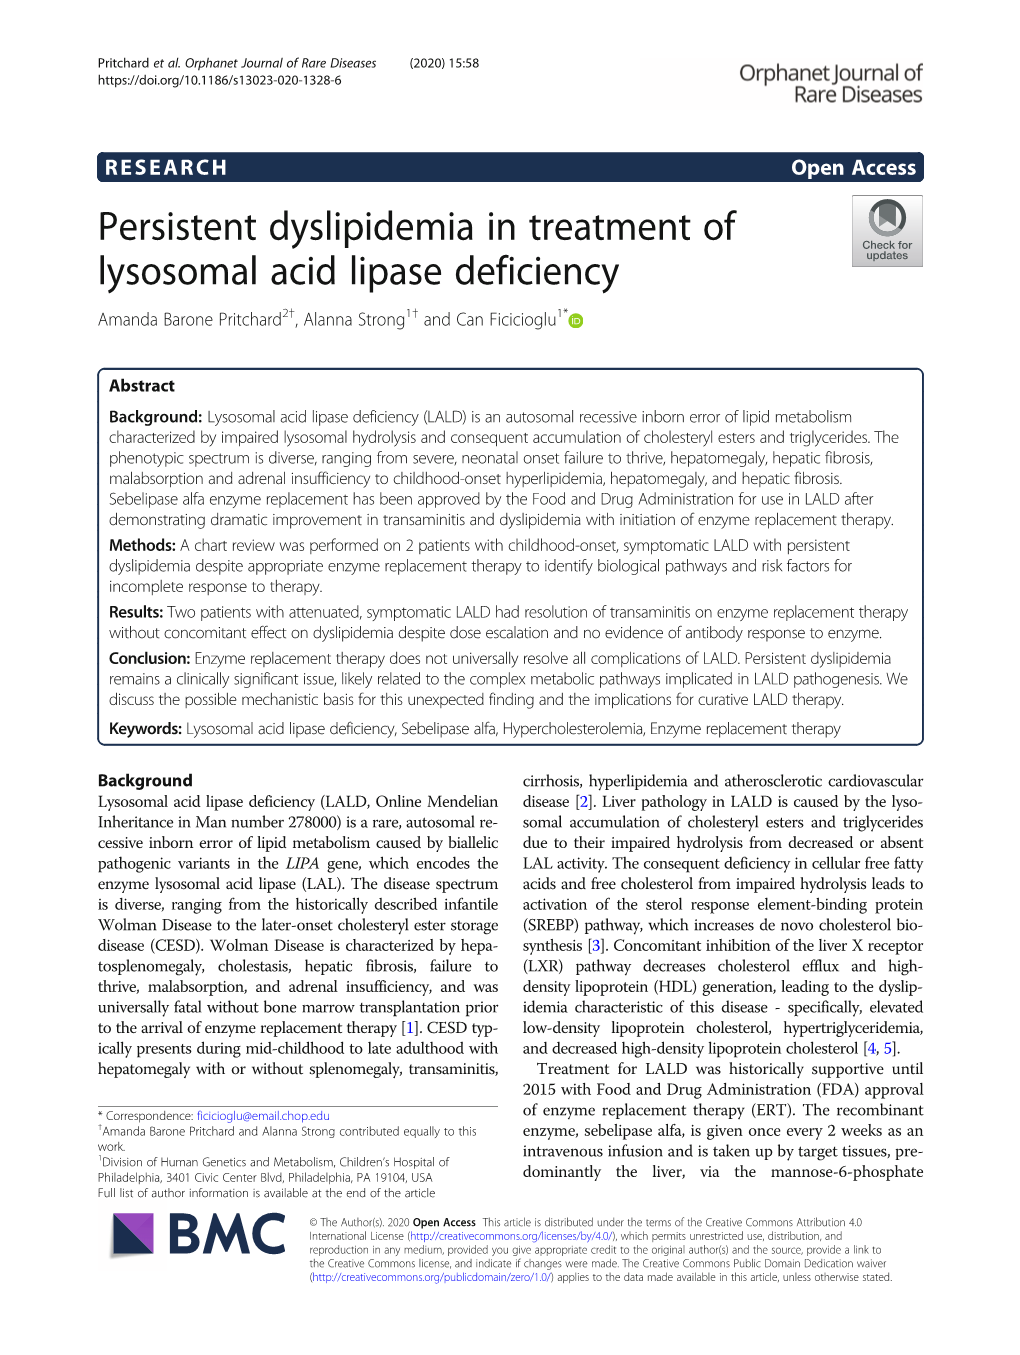 Persistent Dyslipidemia in Treatment of Lysosomal Acid Lipase Deficiency Amanda Barone Pritchard2†, Alanna Strong1† and Can Ficicioglu1*